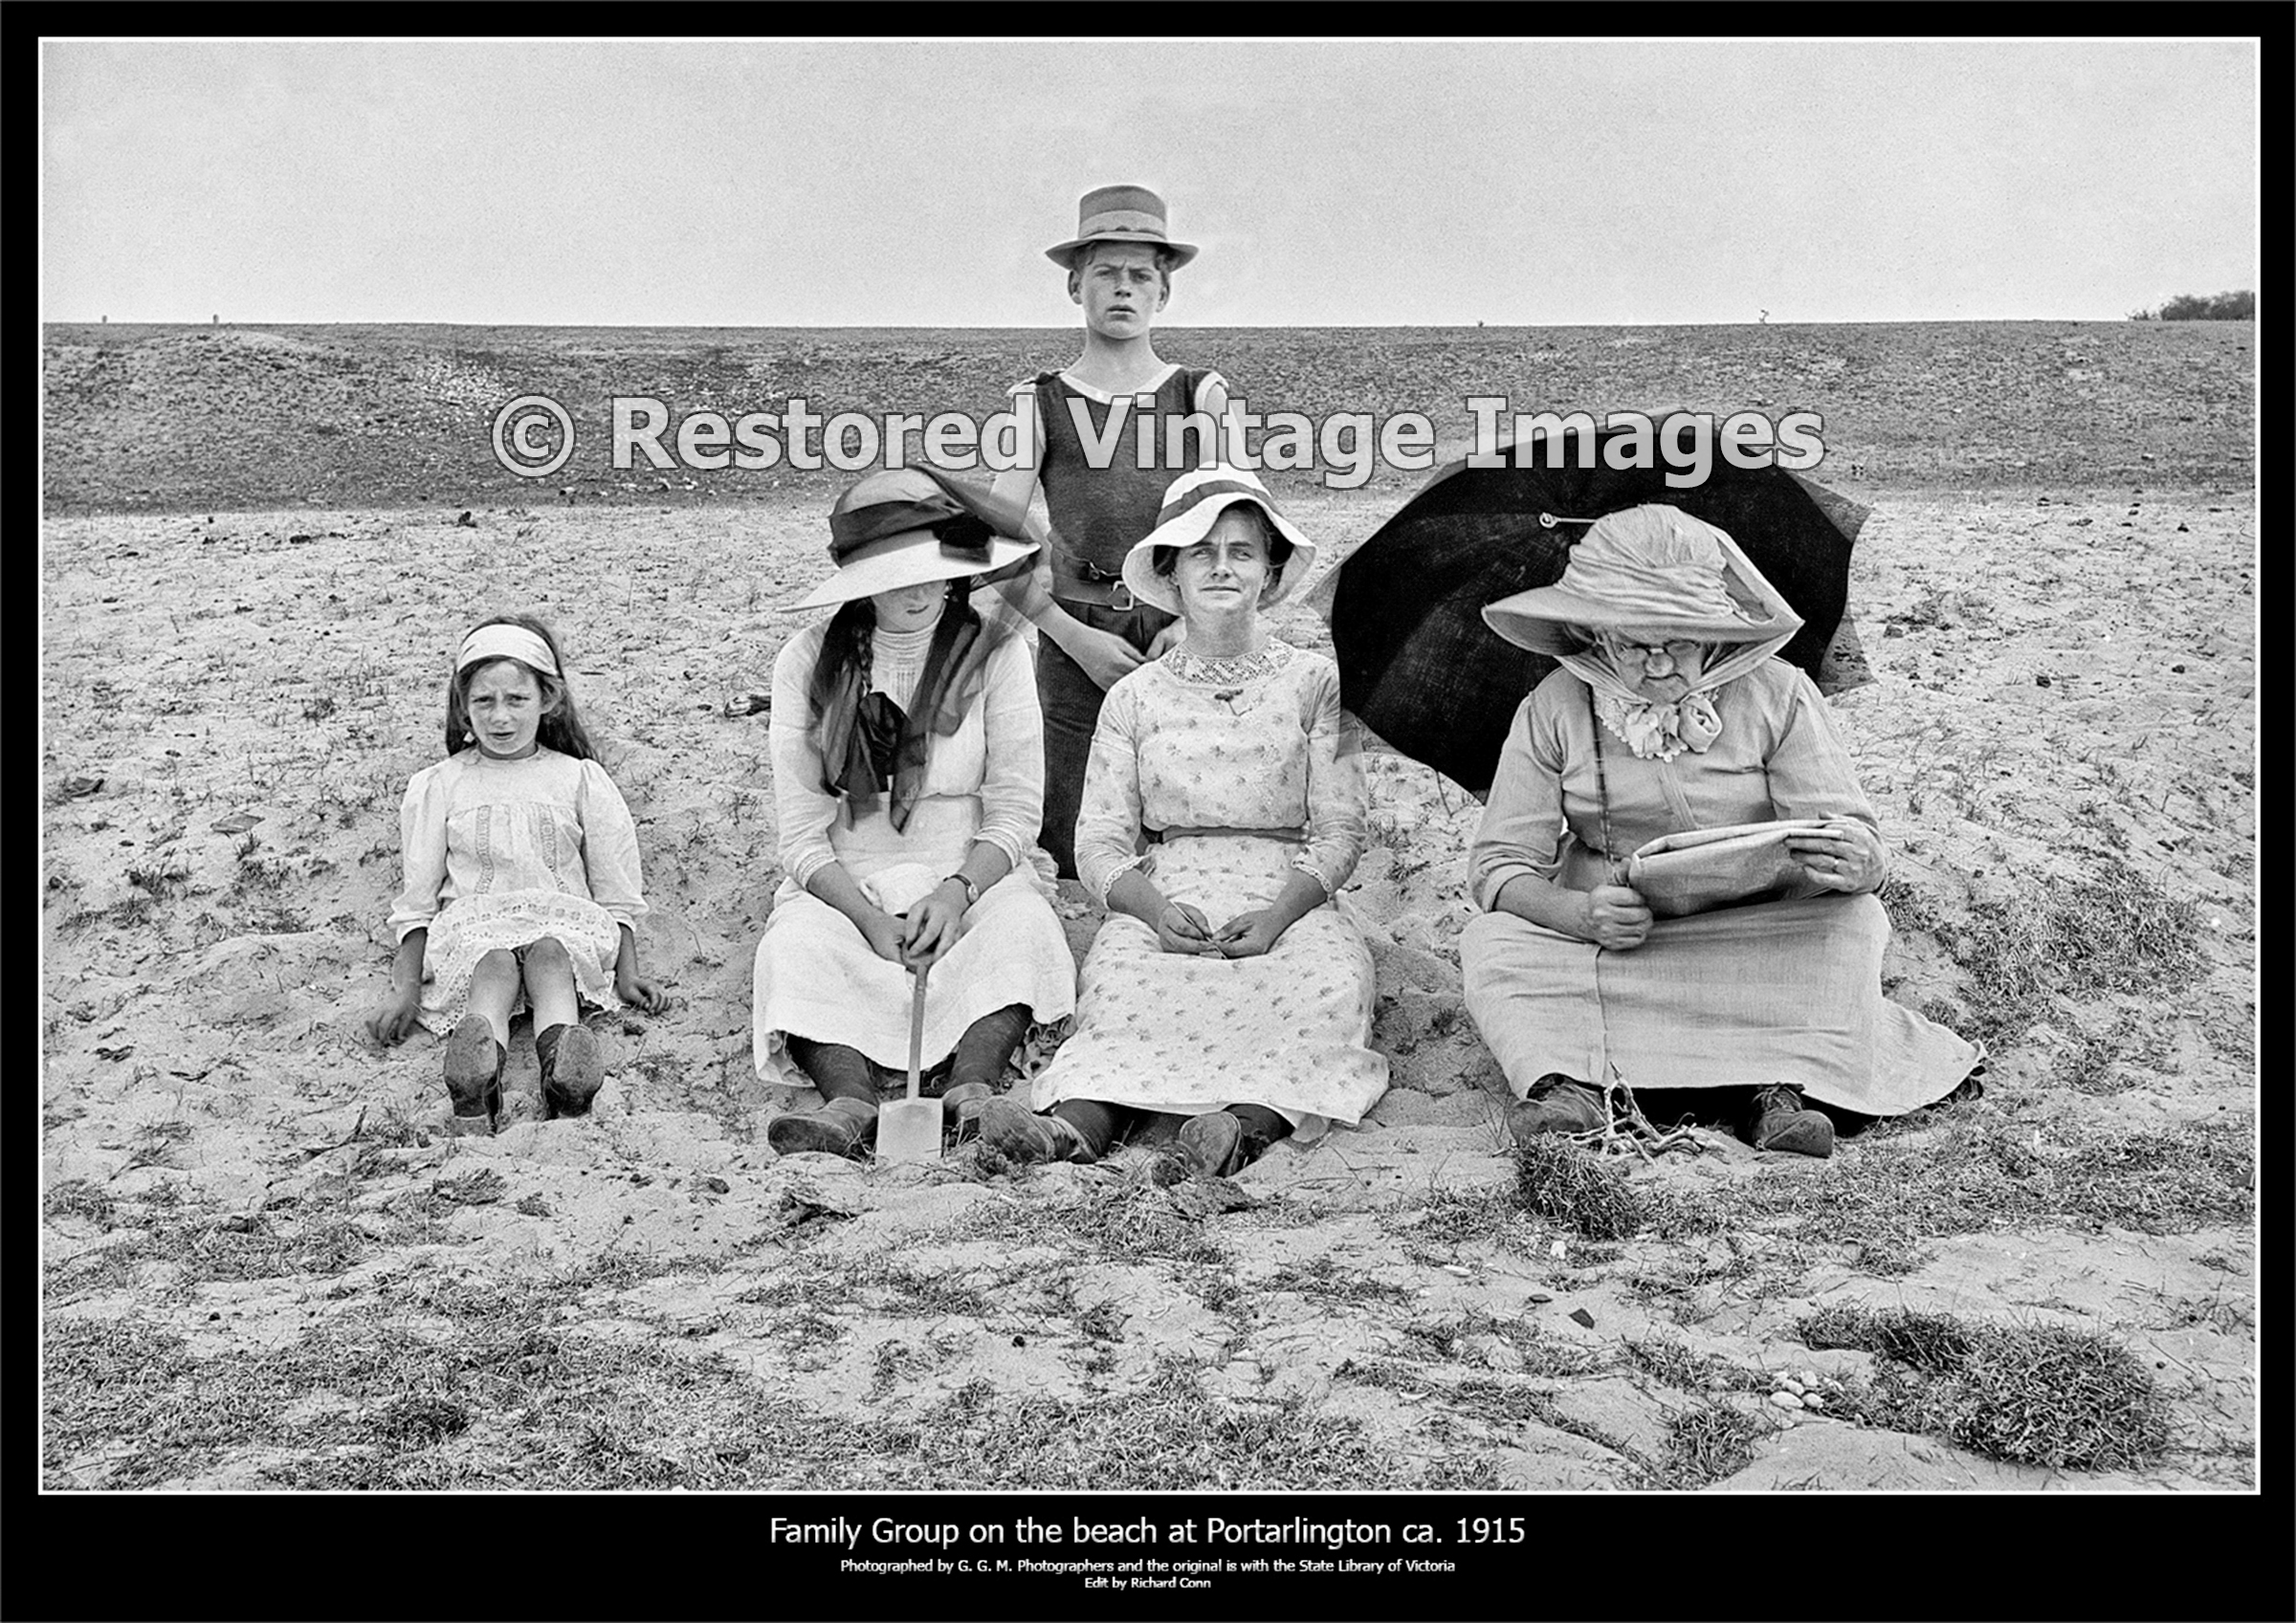 Family Group Of The Beach At Portarlington Ca. 1915